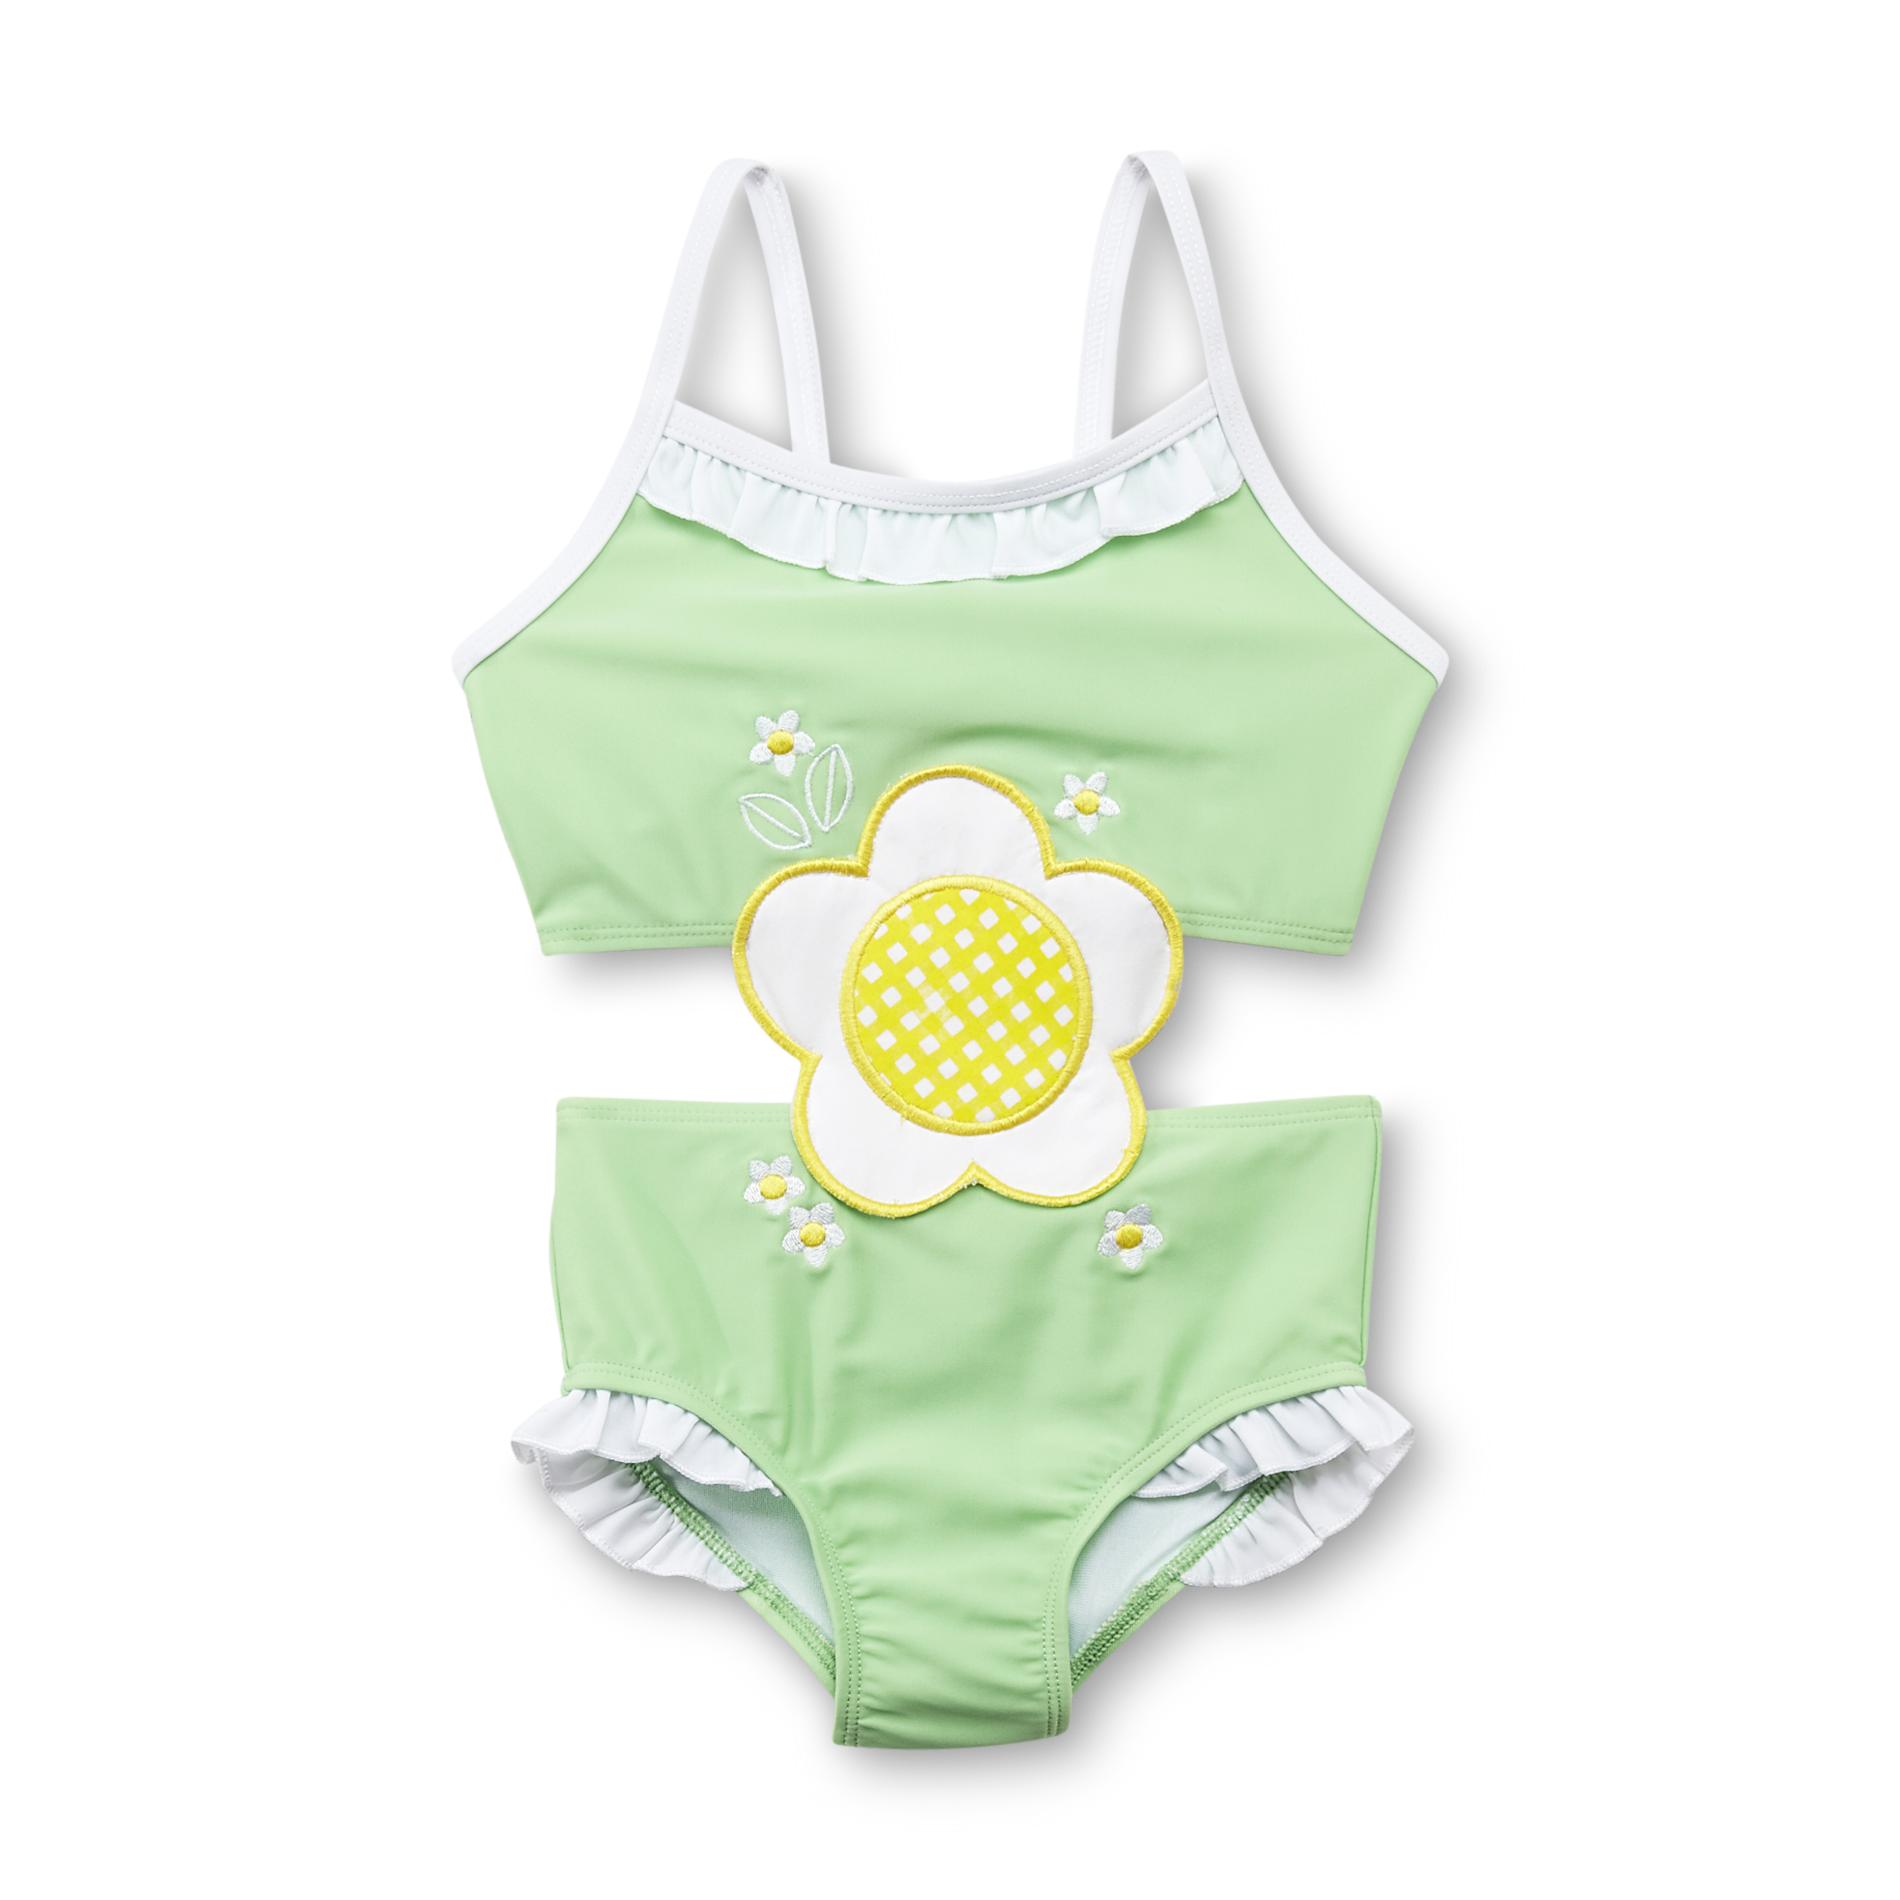 Joe Boxer Infant & Toddler Girl's Monokini Swimsuit - Floral